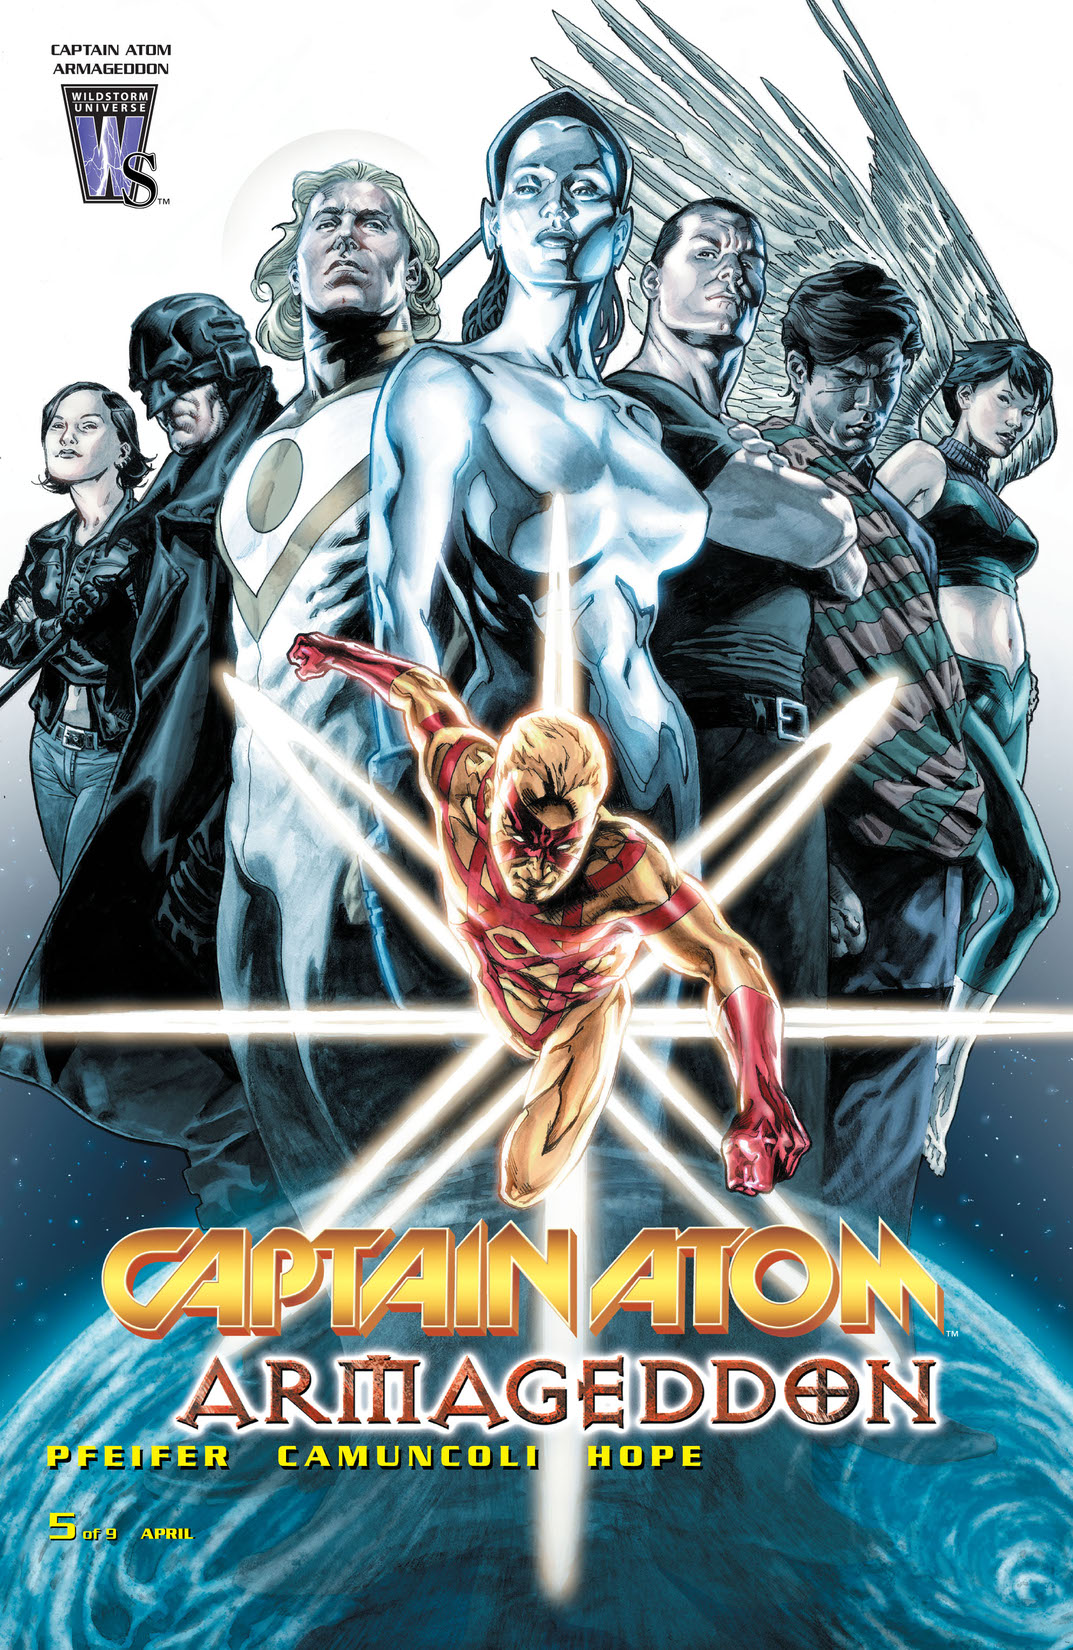 Captain Atom: Armageddon #5 preview images